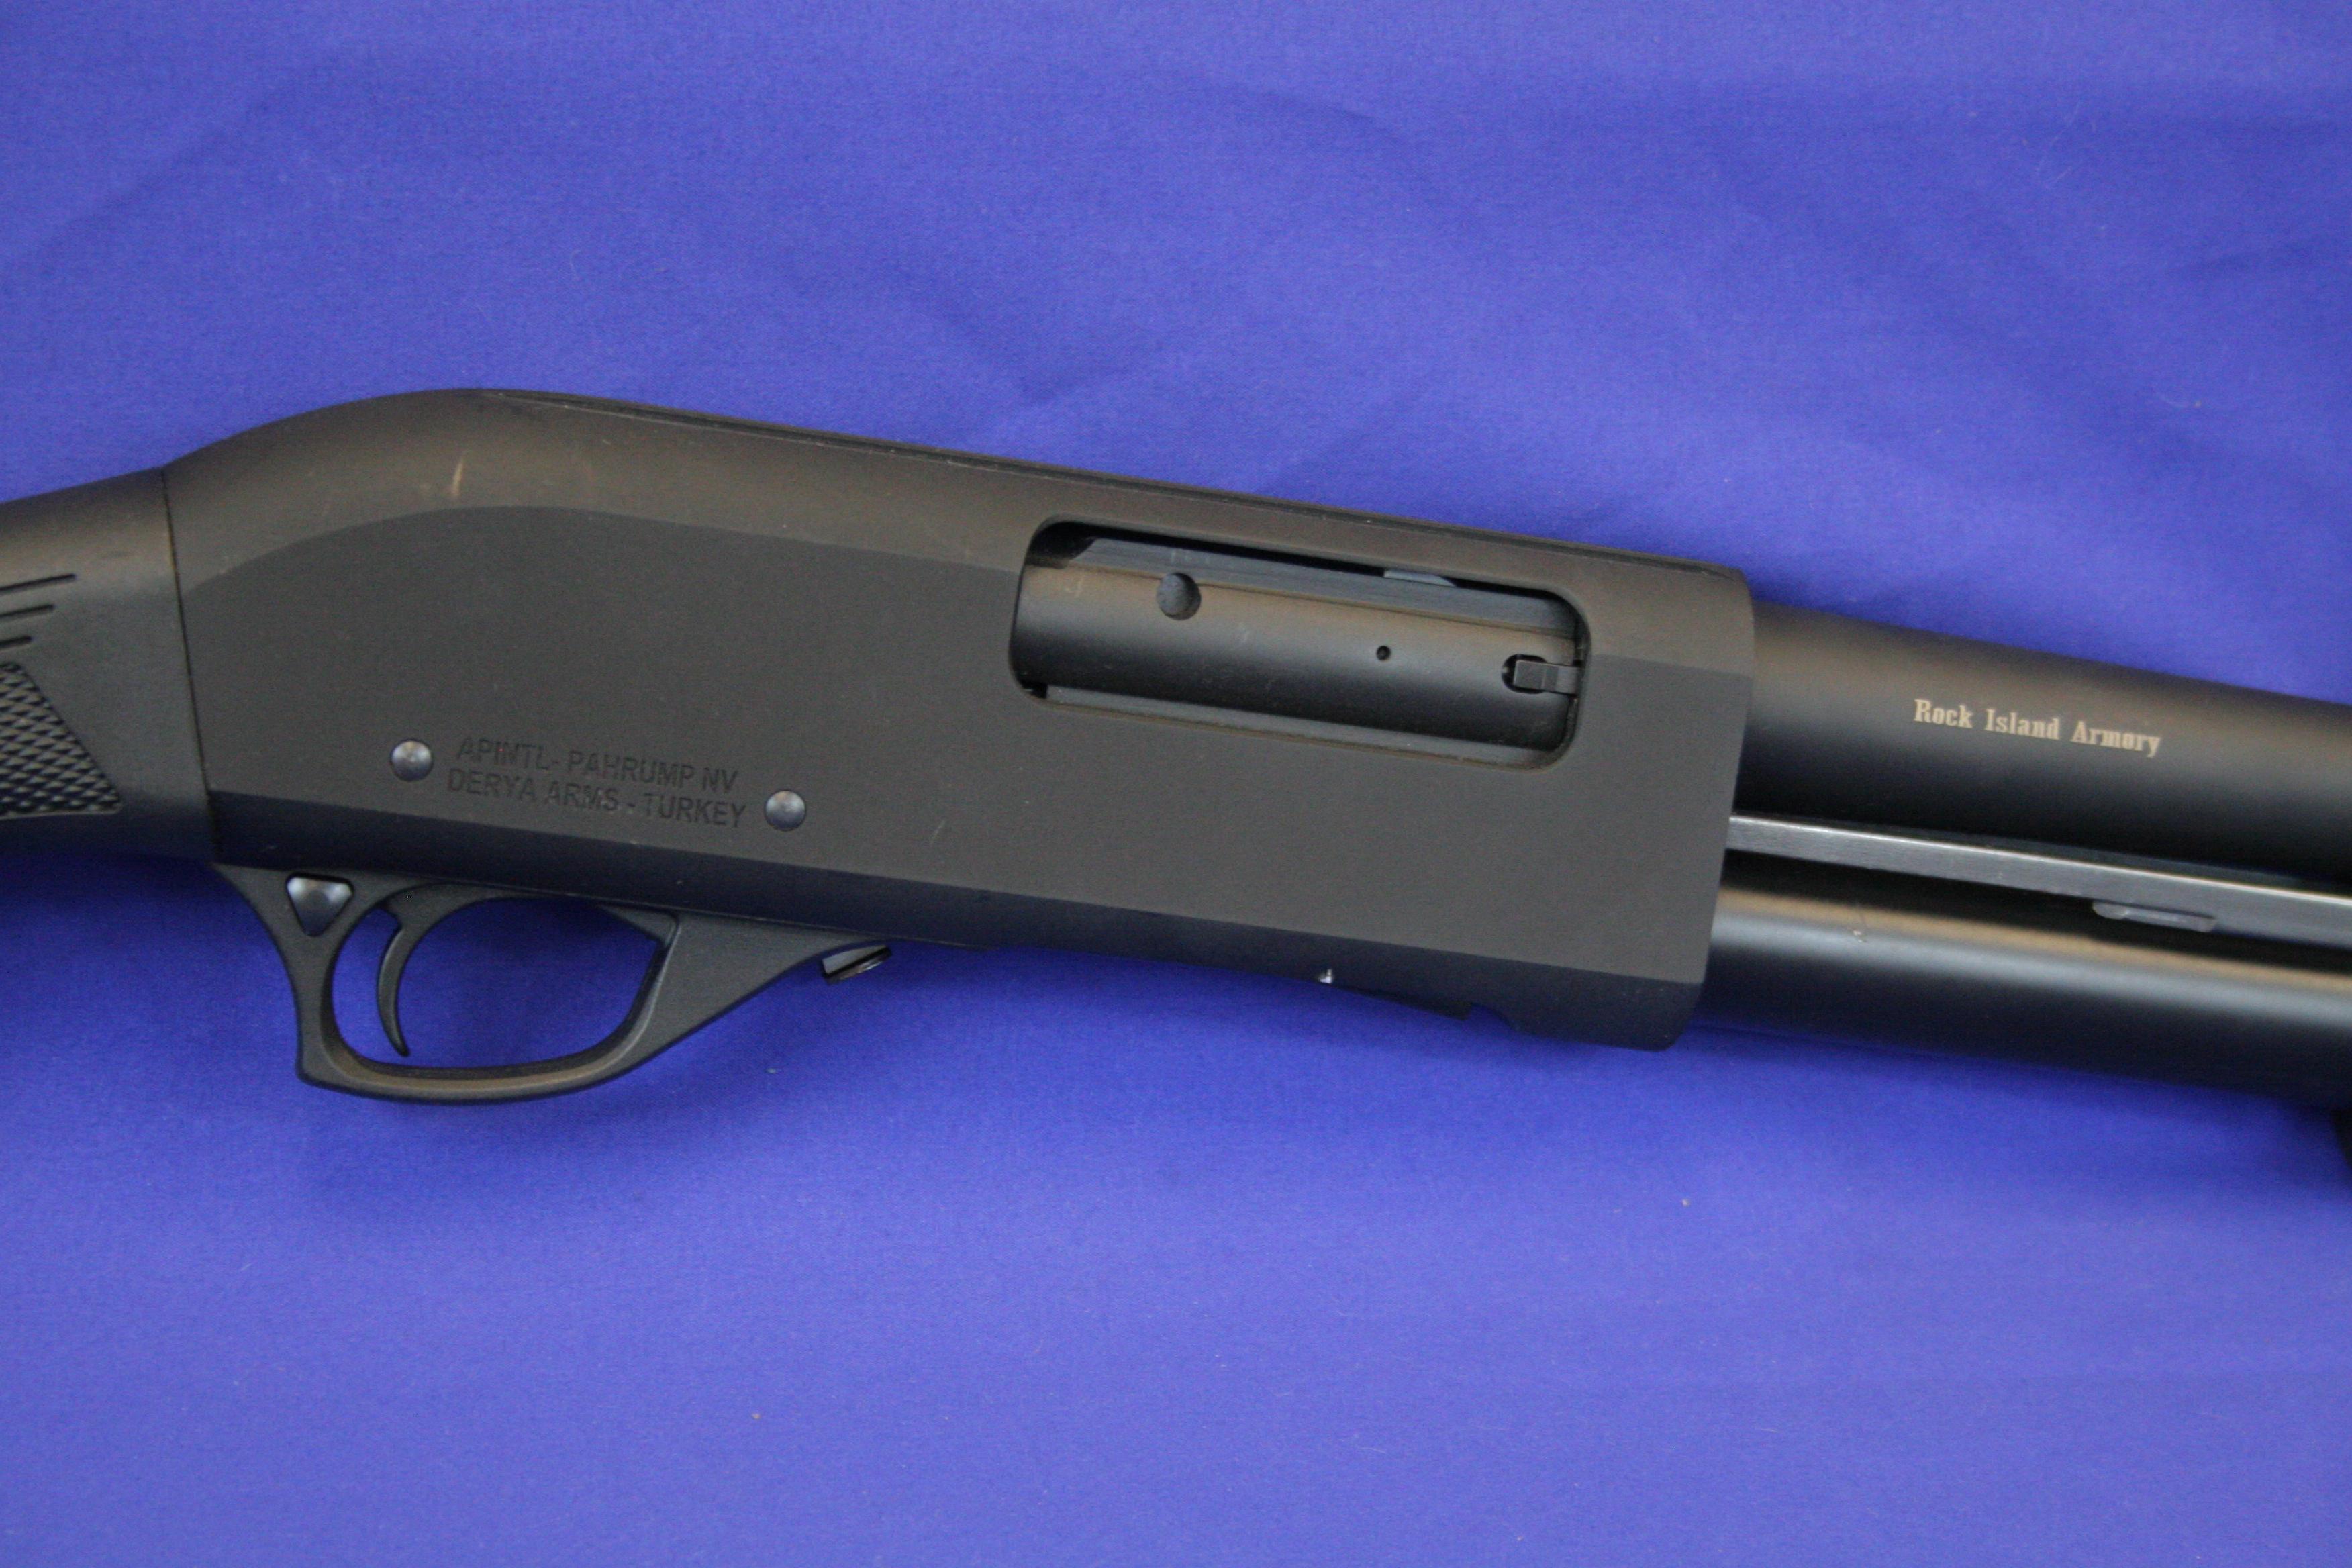 NIB Rock Island Armory Pump Shotgun Cal 12ga SN: R178906 (Guide $450-550)